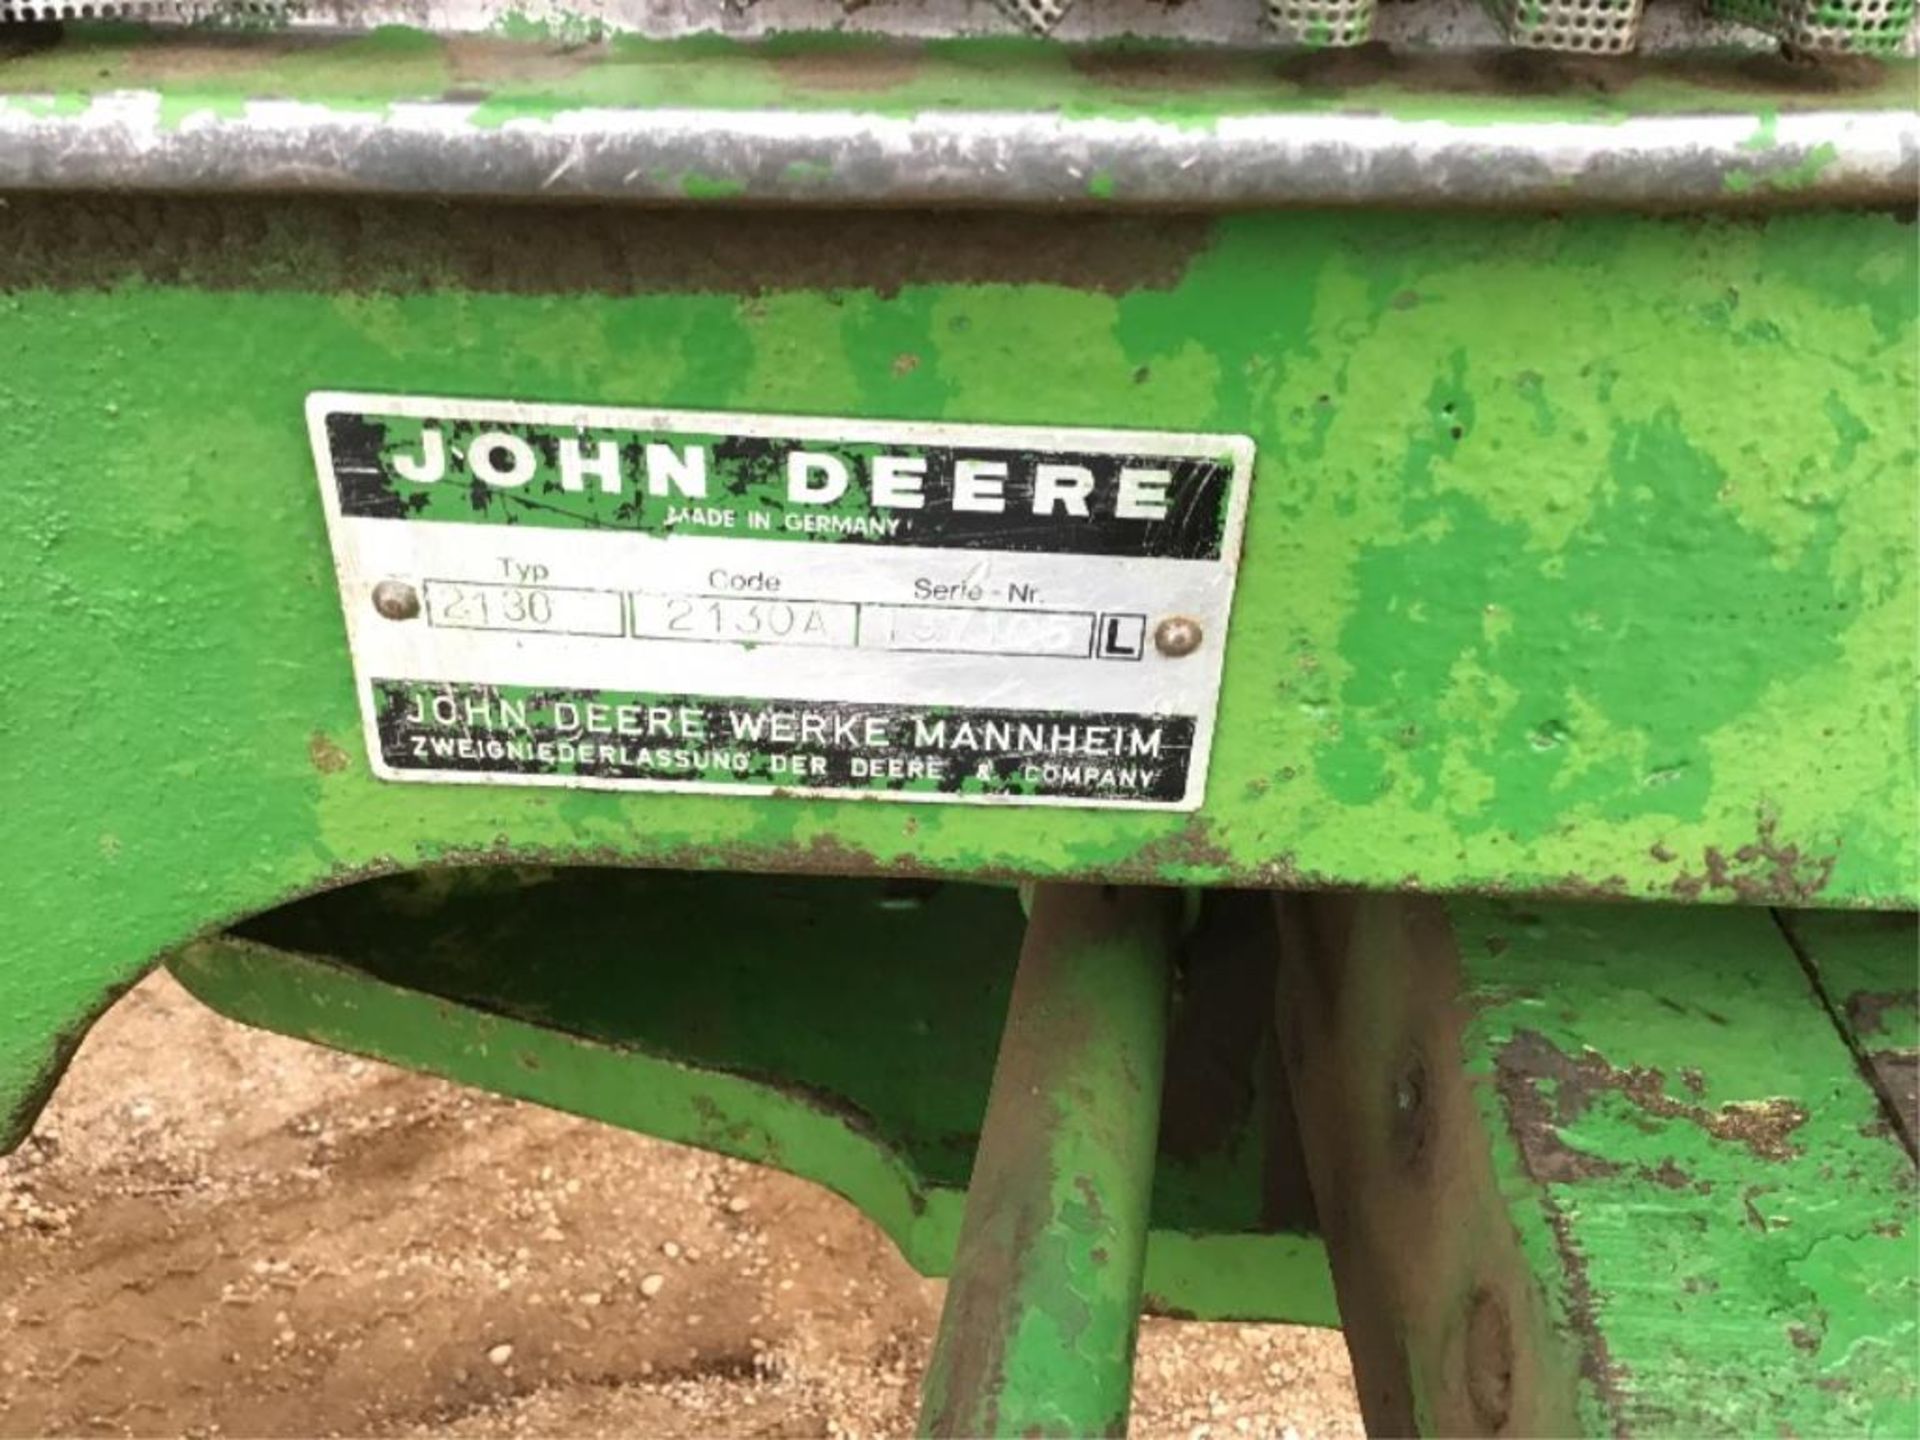 2130 John Deere 2wd Tractor c/w FEL, & 6ft Bucket, 3ph, 540PTO, Rear Wheel Weights, (No Brakes) - Image 4 of 8